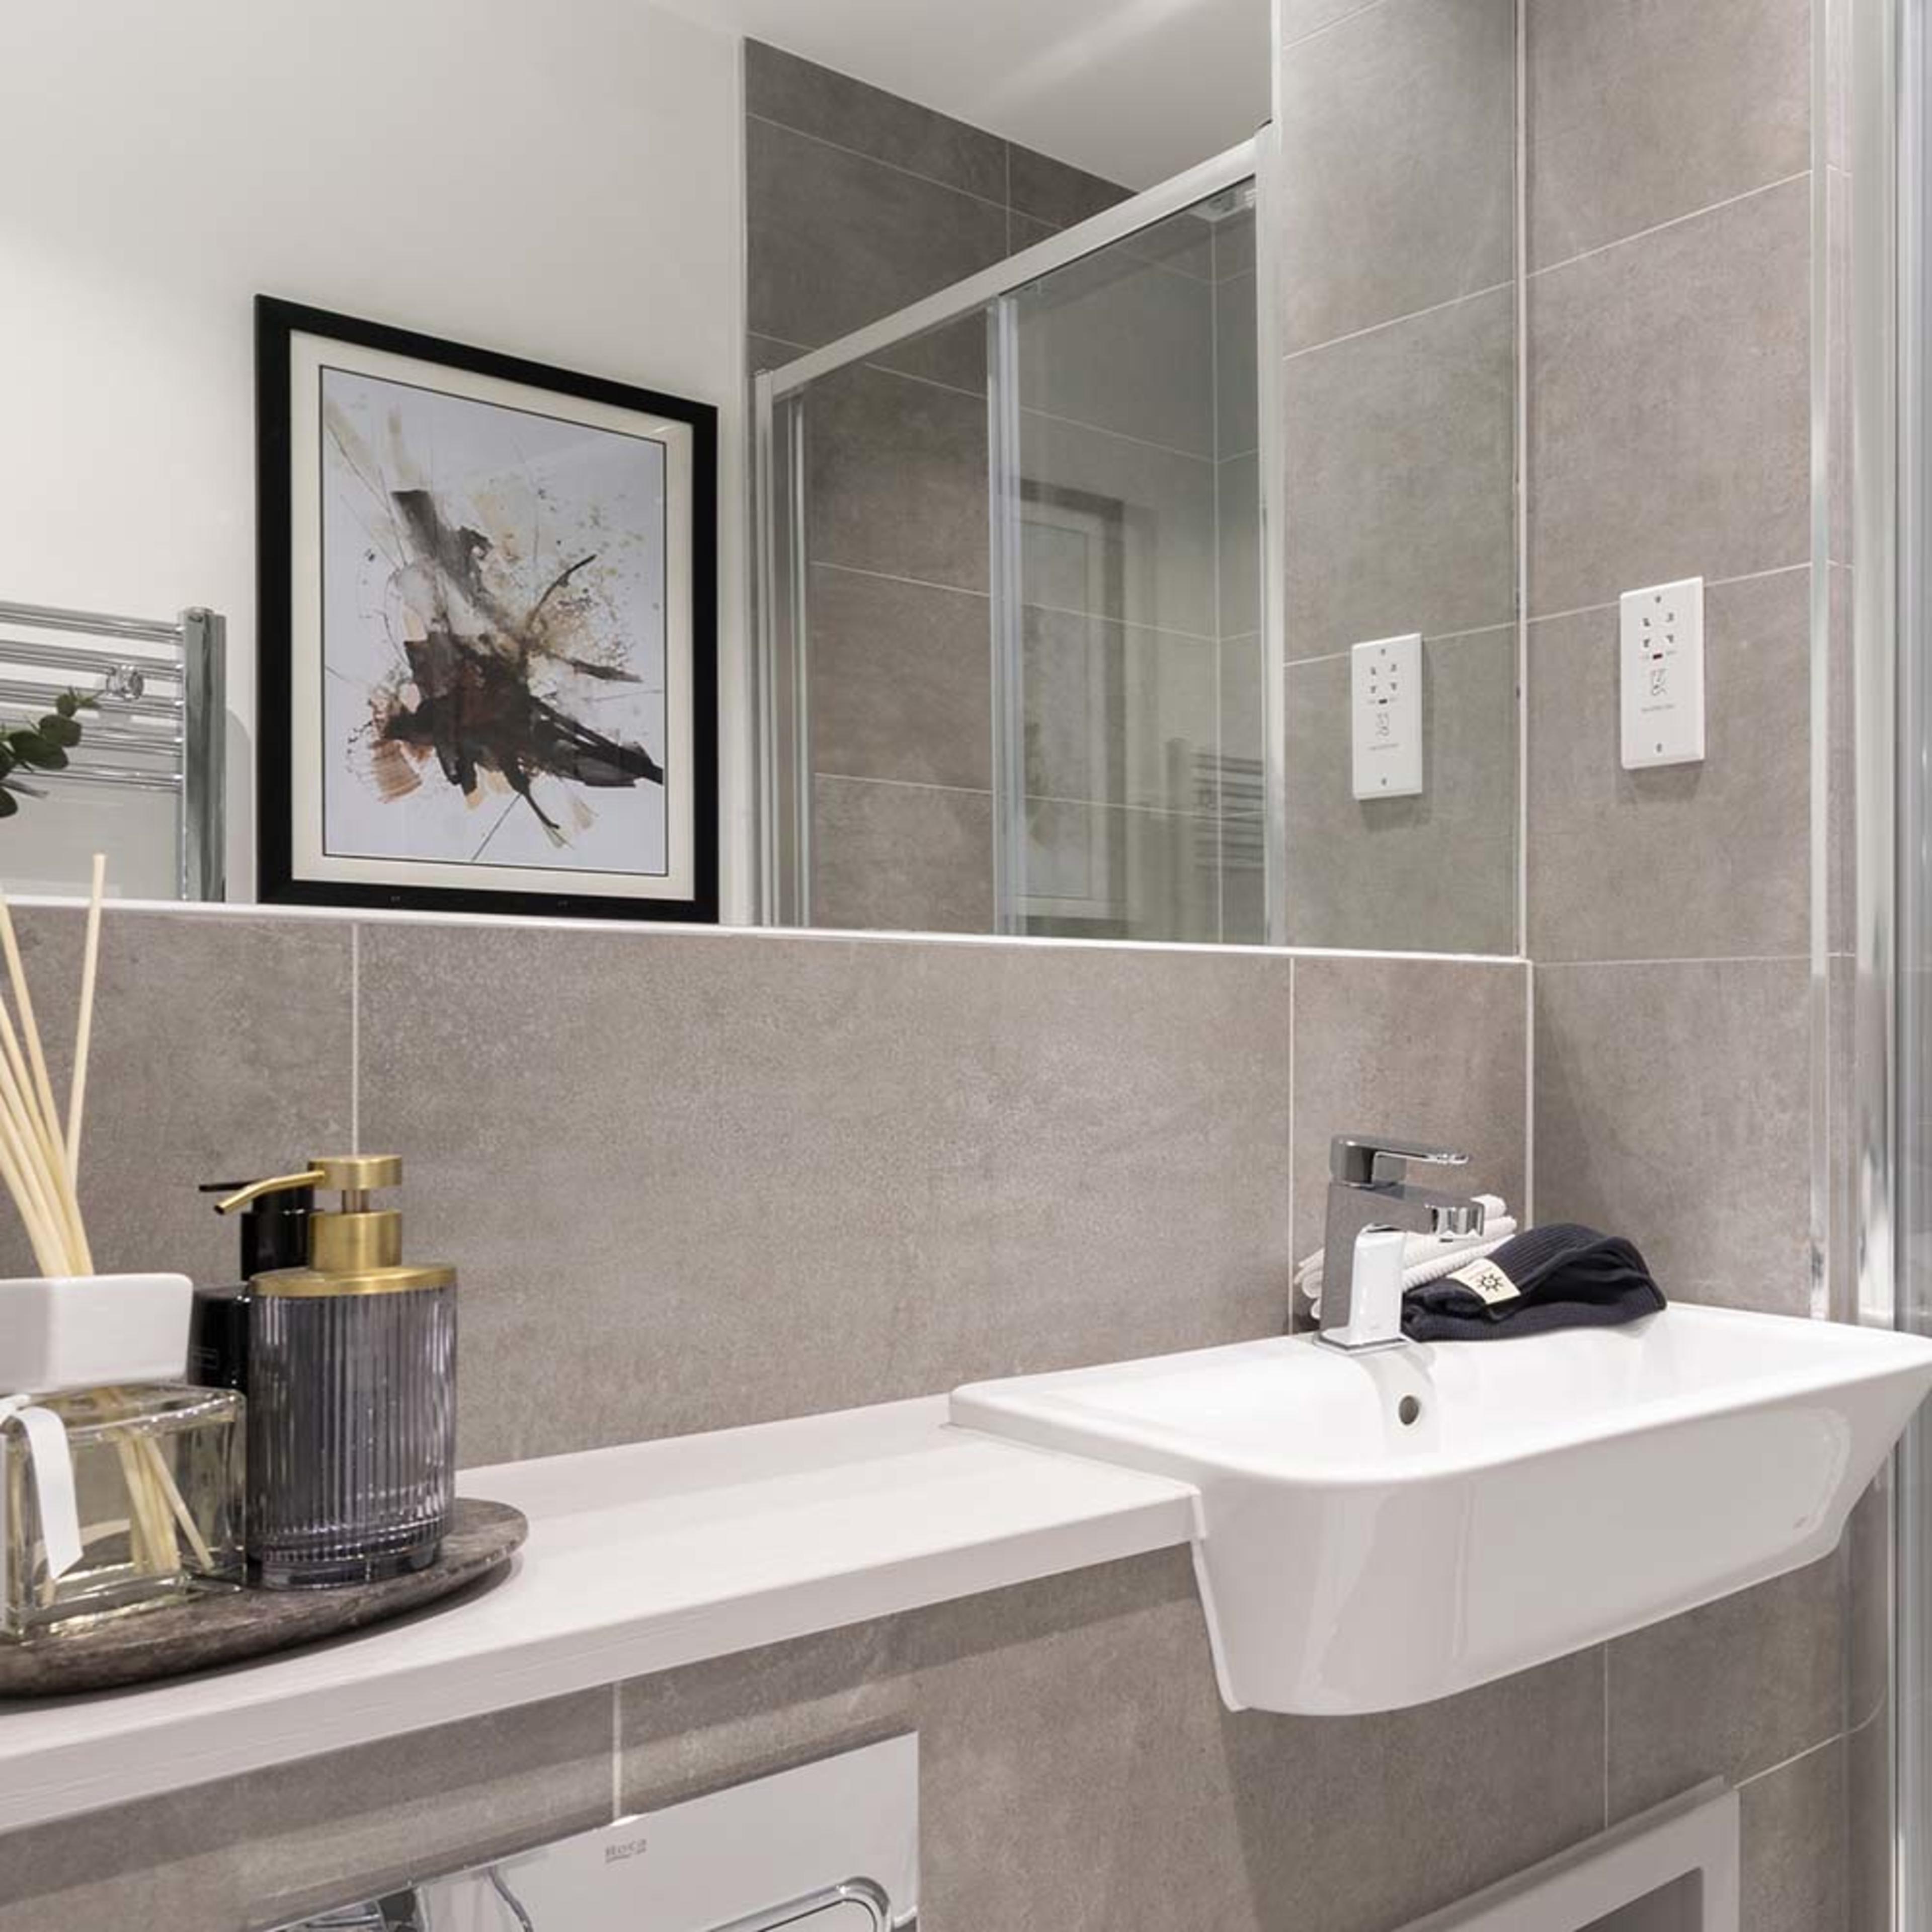 persona-homes-specification-bathroom-closeup-dark-tiles-white-sink-mirror-wall